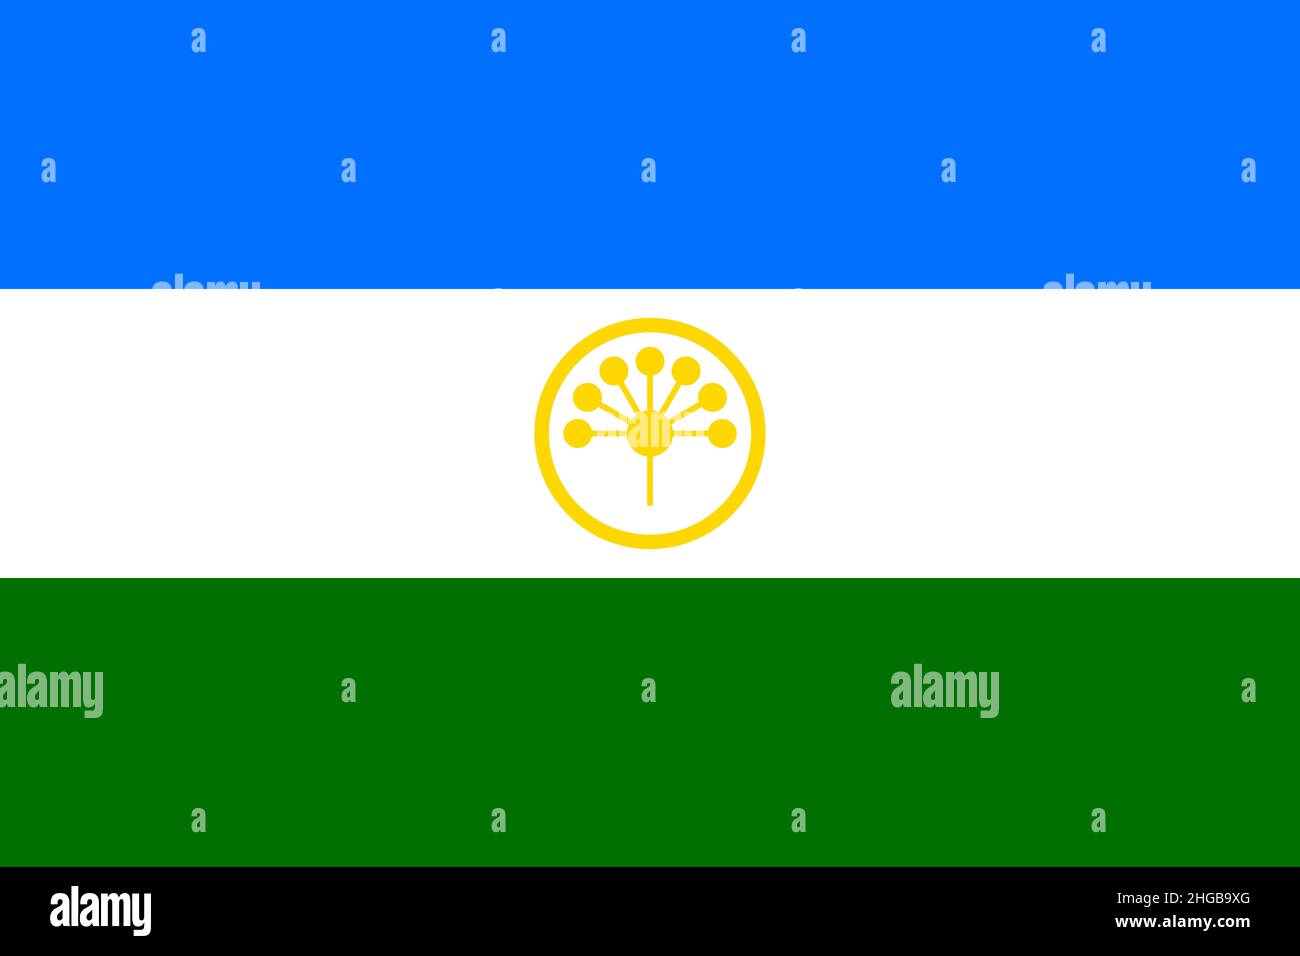 Grand drapeau plat officiel du Bashkortostan horizontal Banque D'Images